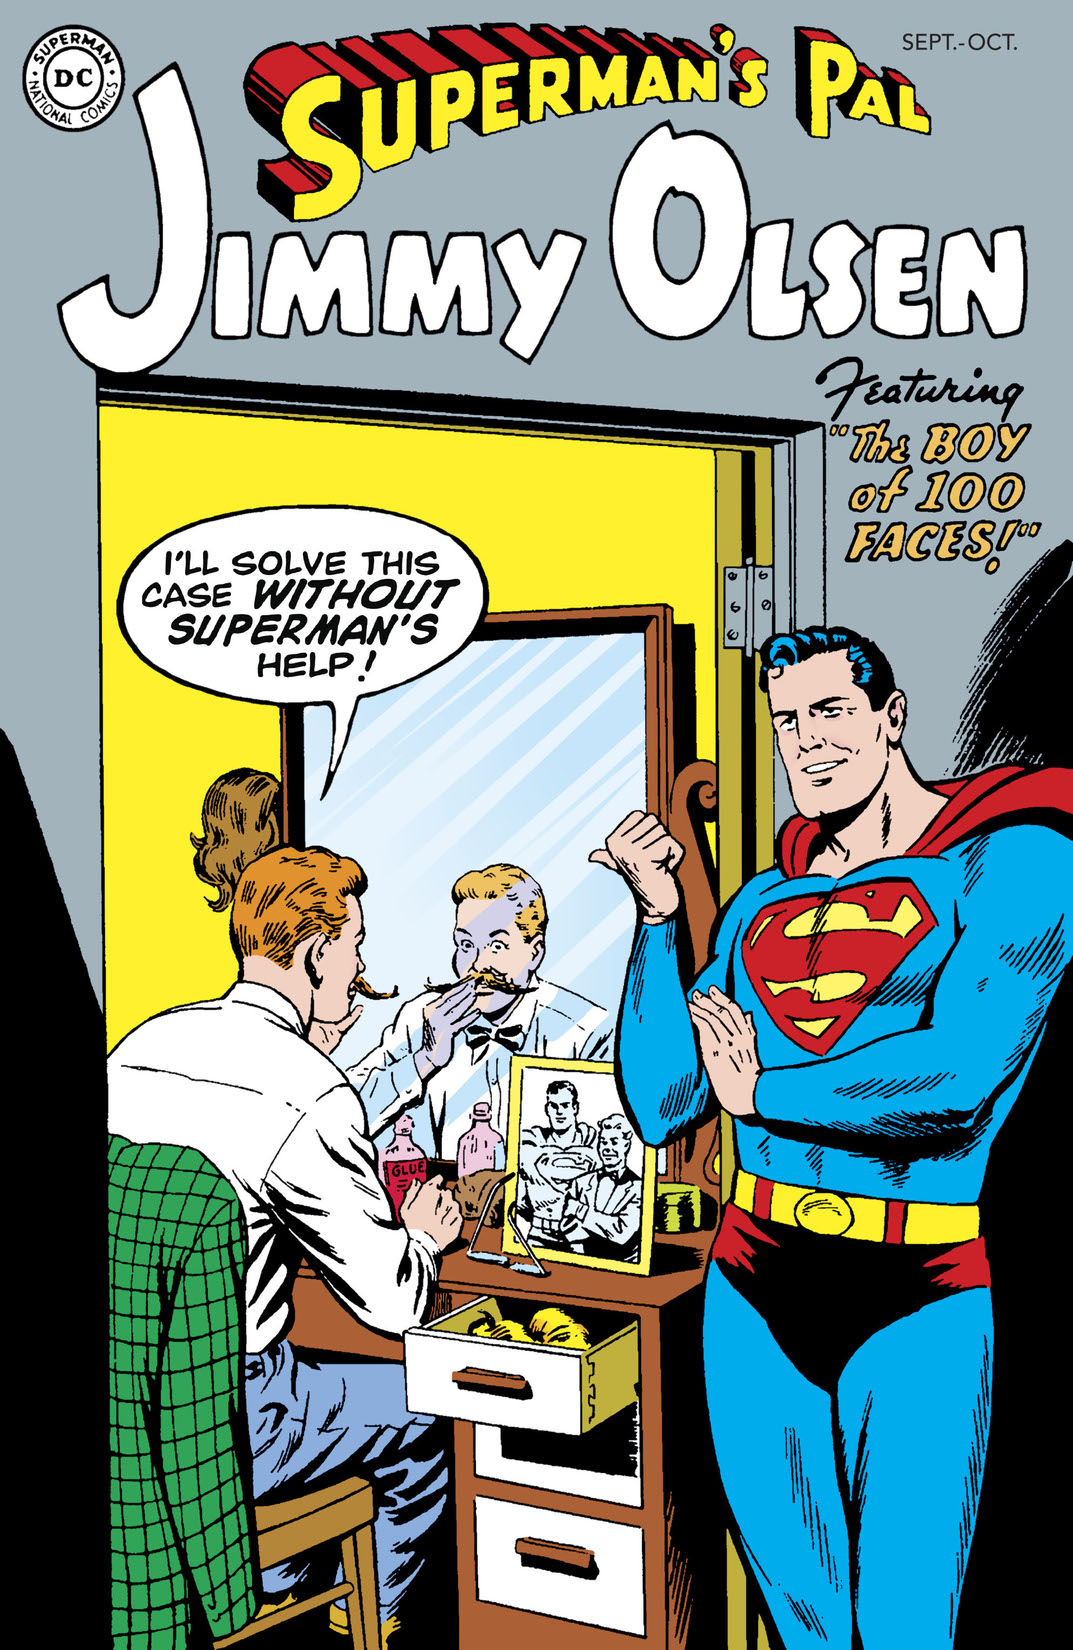 Superman's Pal, Jimmy Olsen #1 preview images